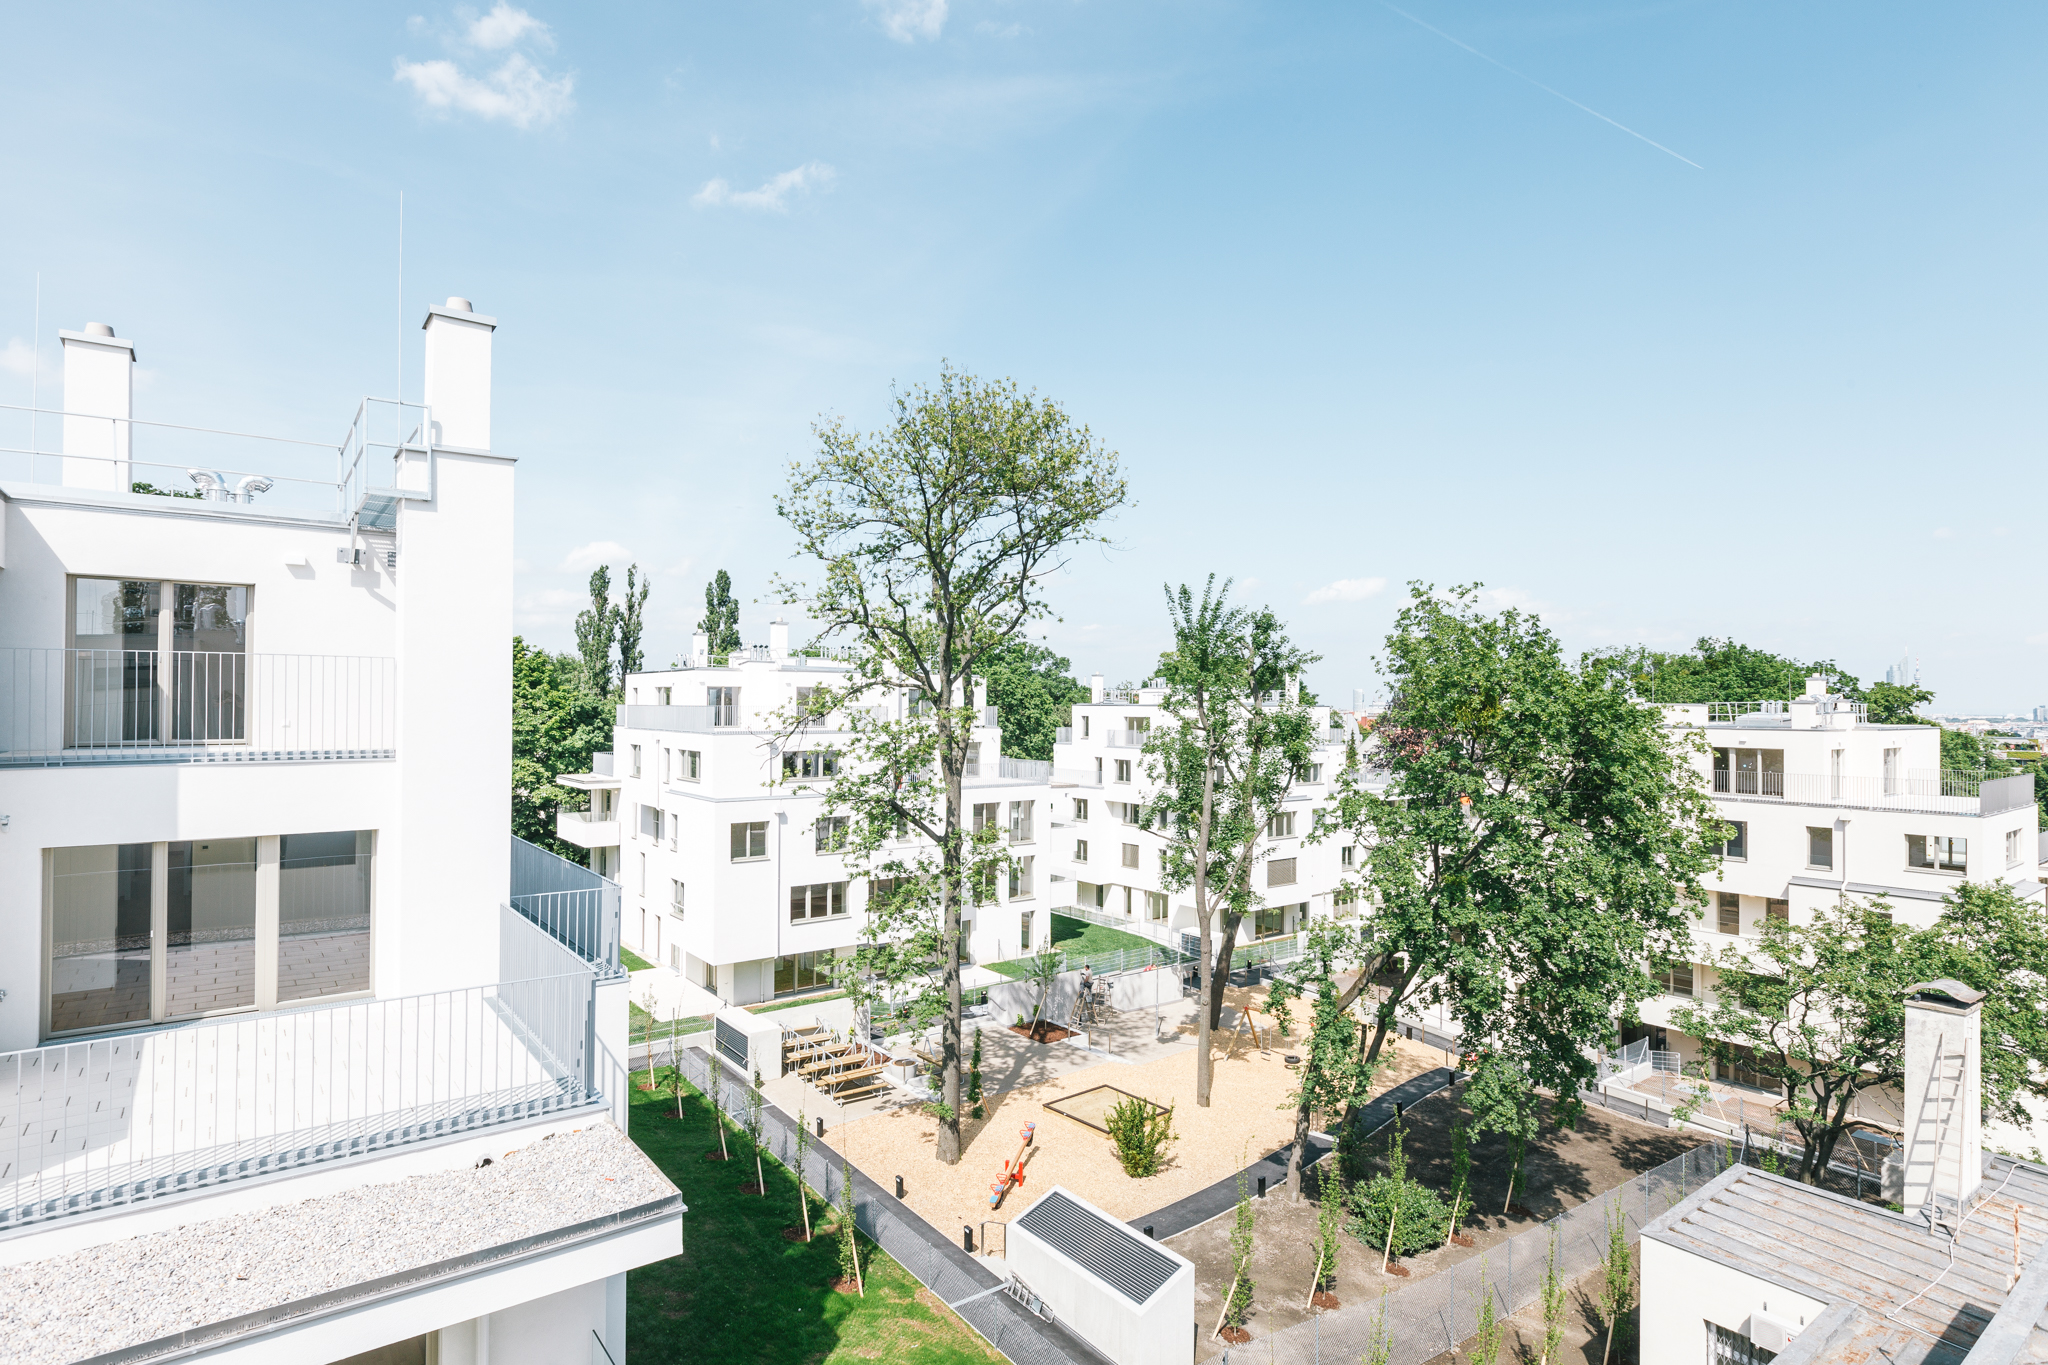 Neue Villen XIX, 1190 Wien - Real estate project development